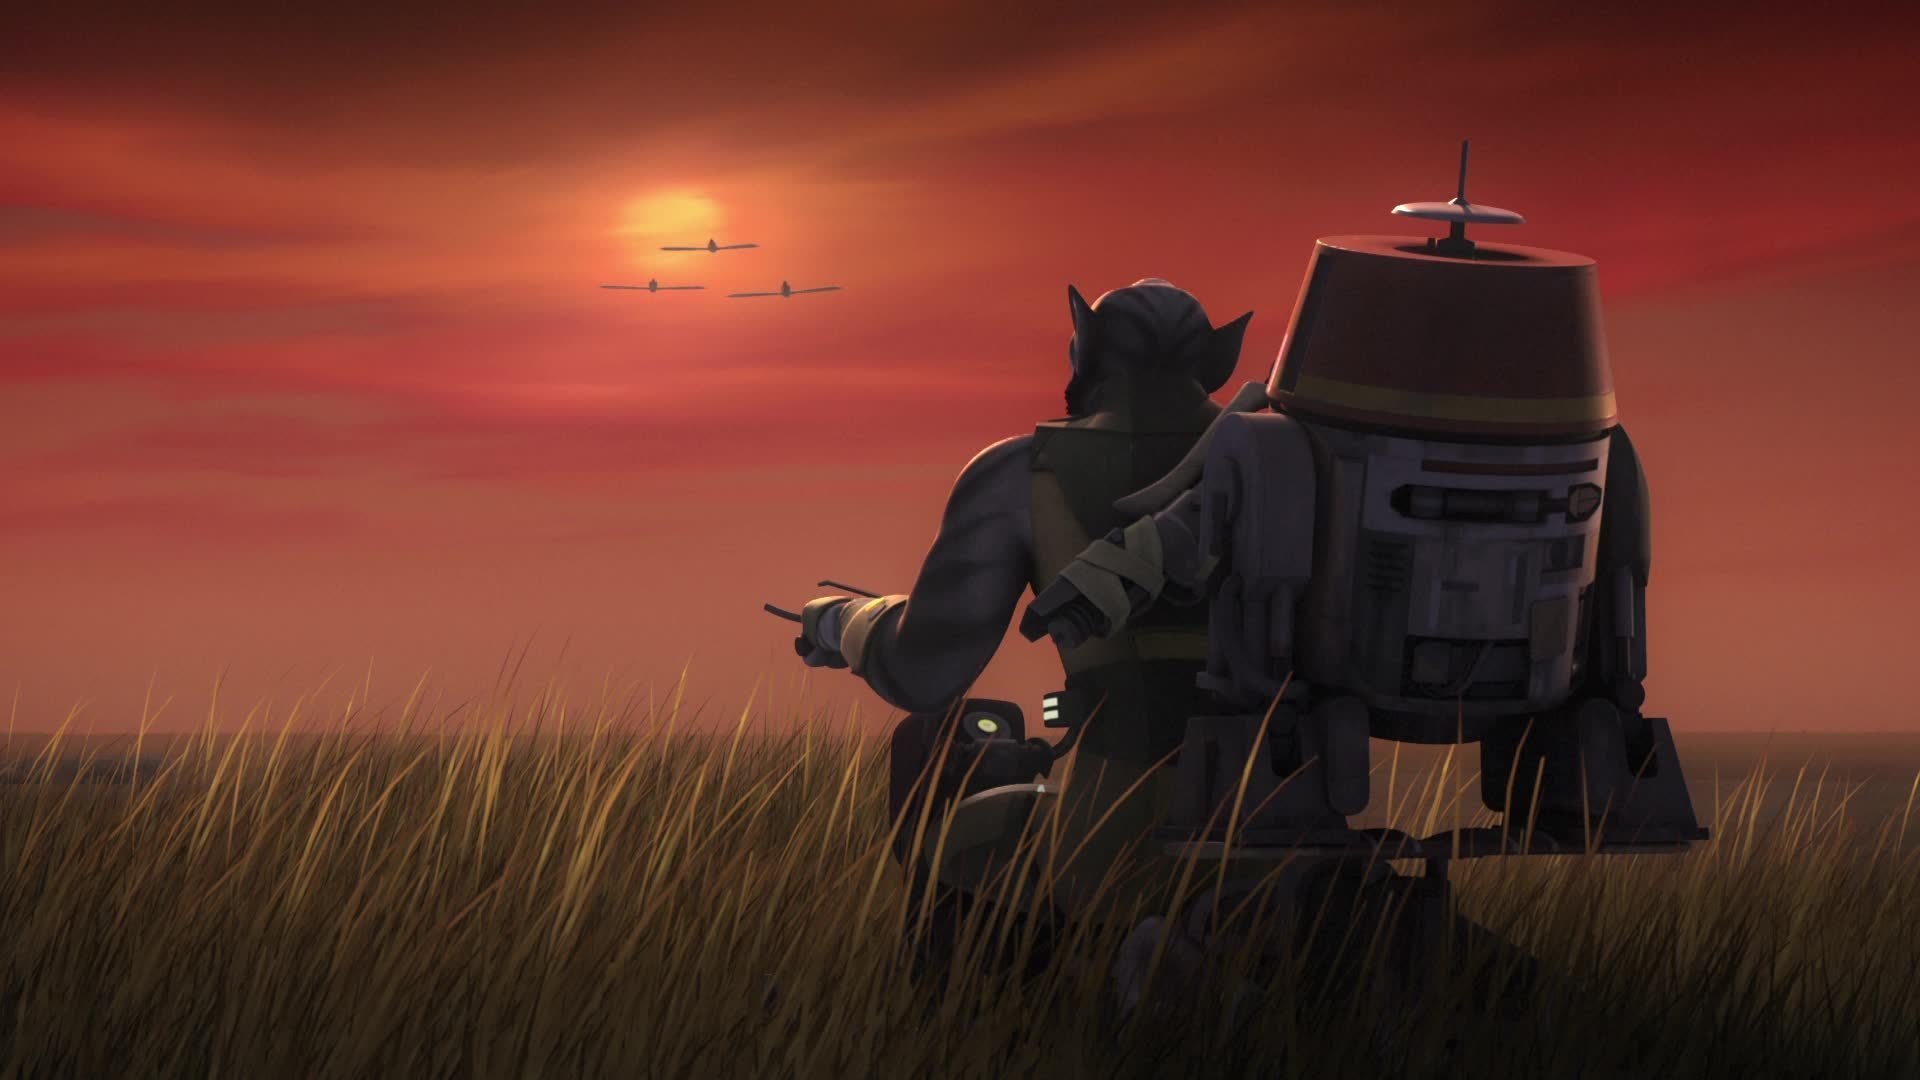 Bring Her Back - "Jedi Night" Preview | Star Wars Rebels